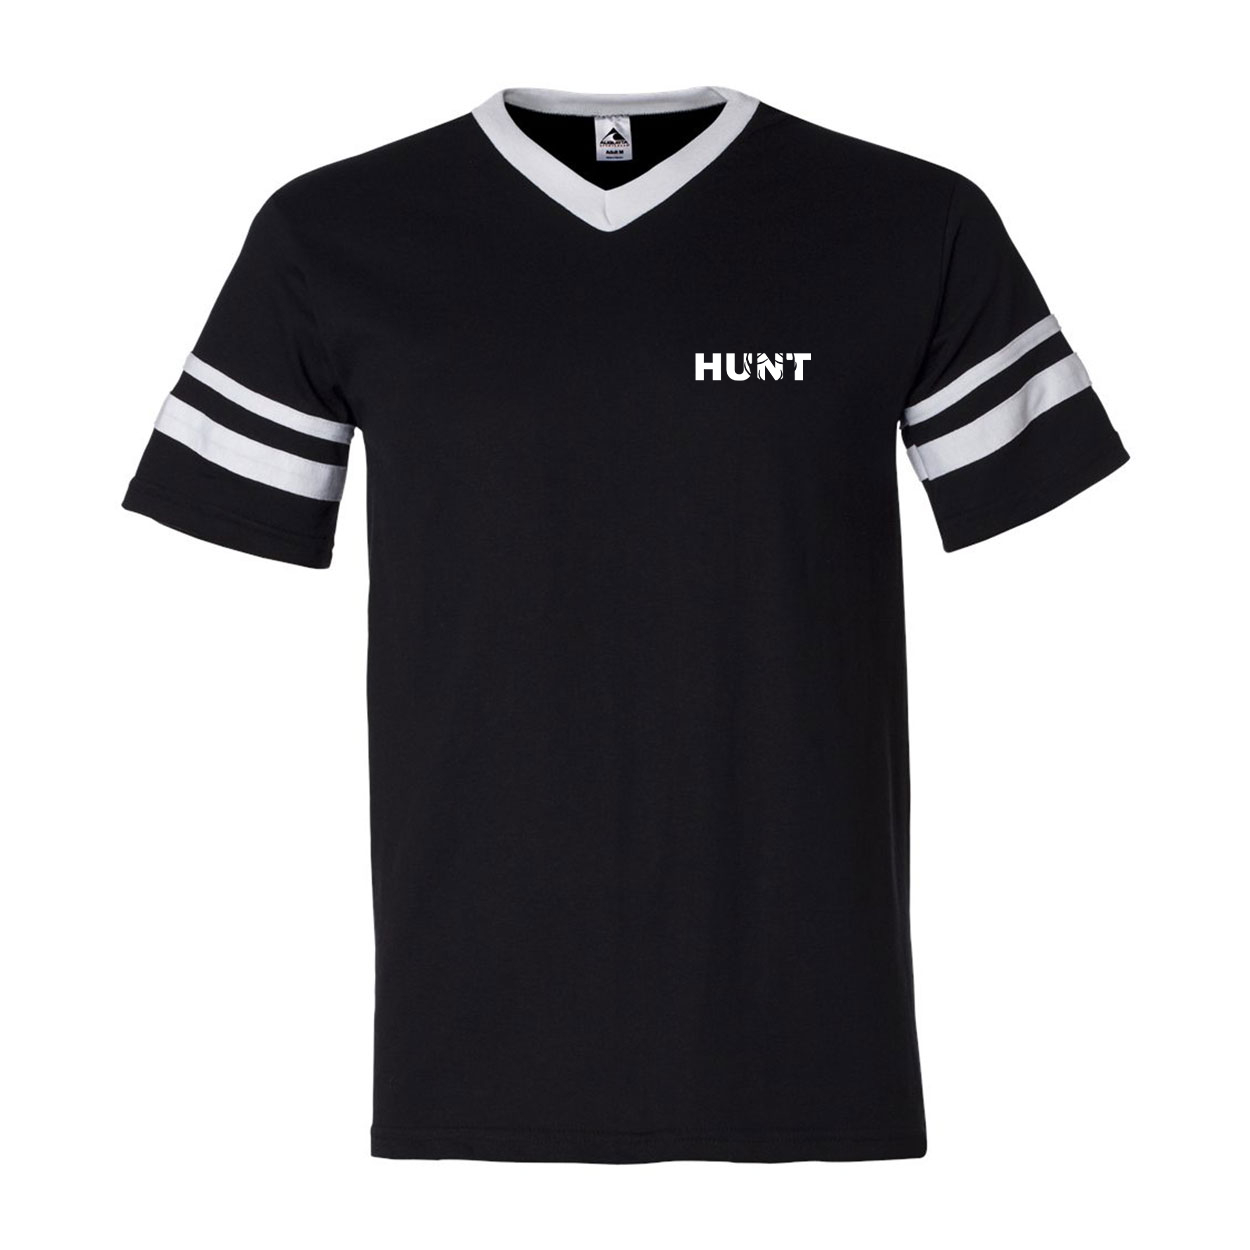 Hunt Rack Logo Night Out Premium Striped Jersey T-Shirt Black/White (White Logo)